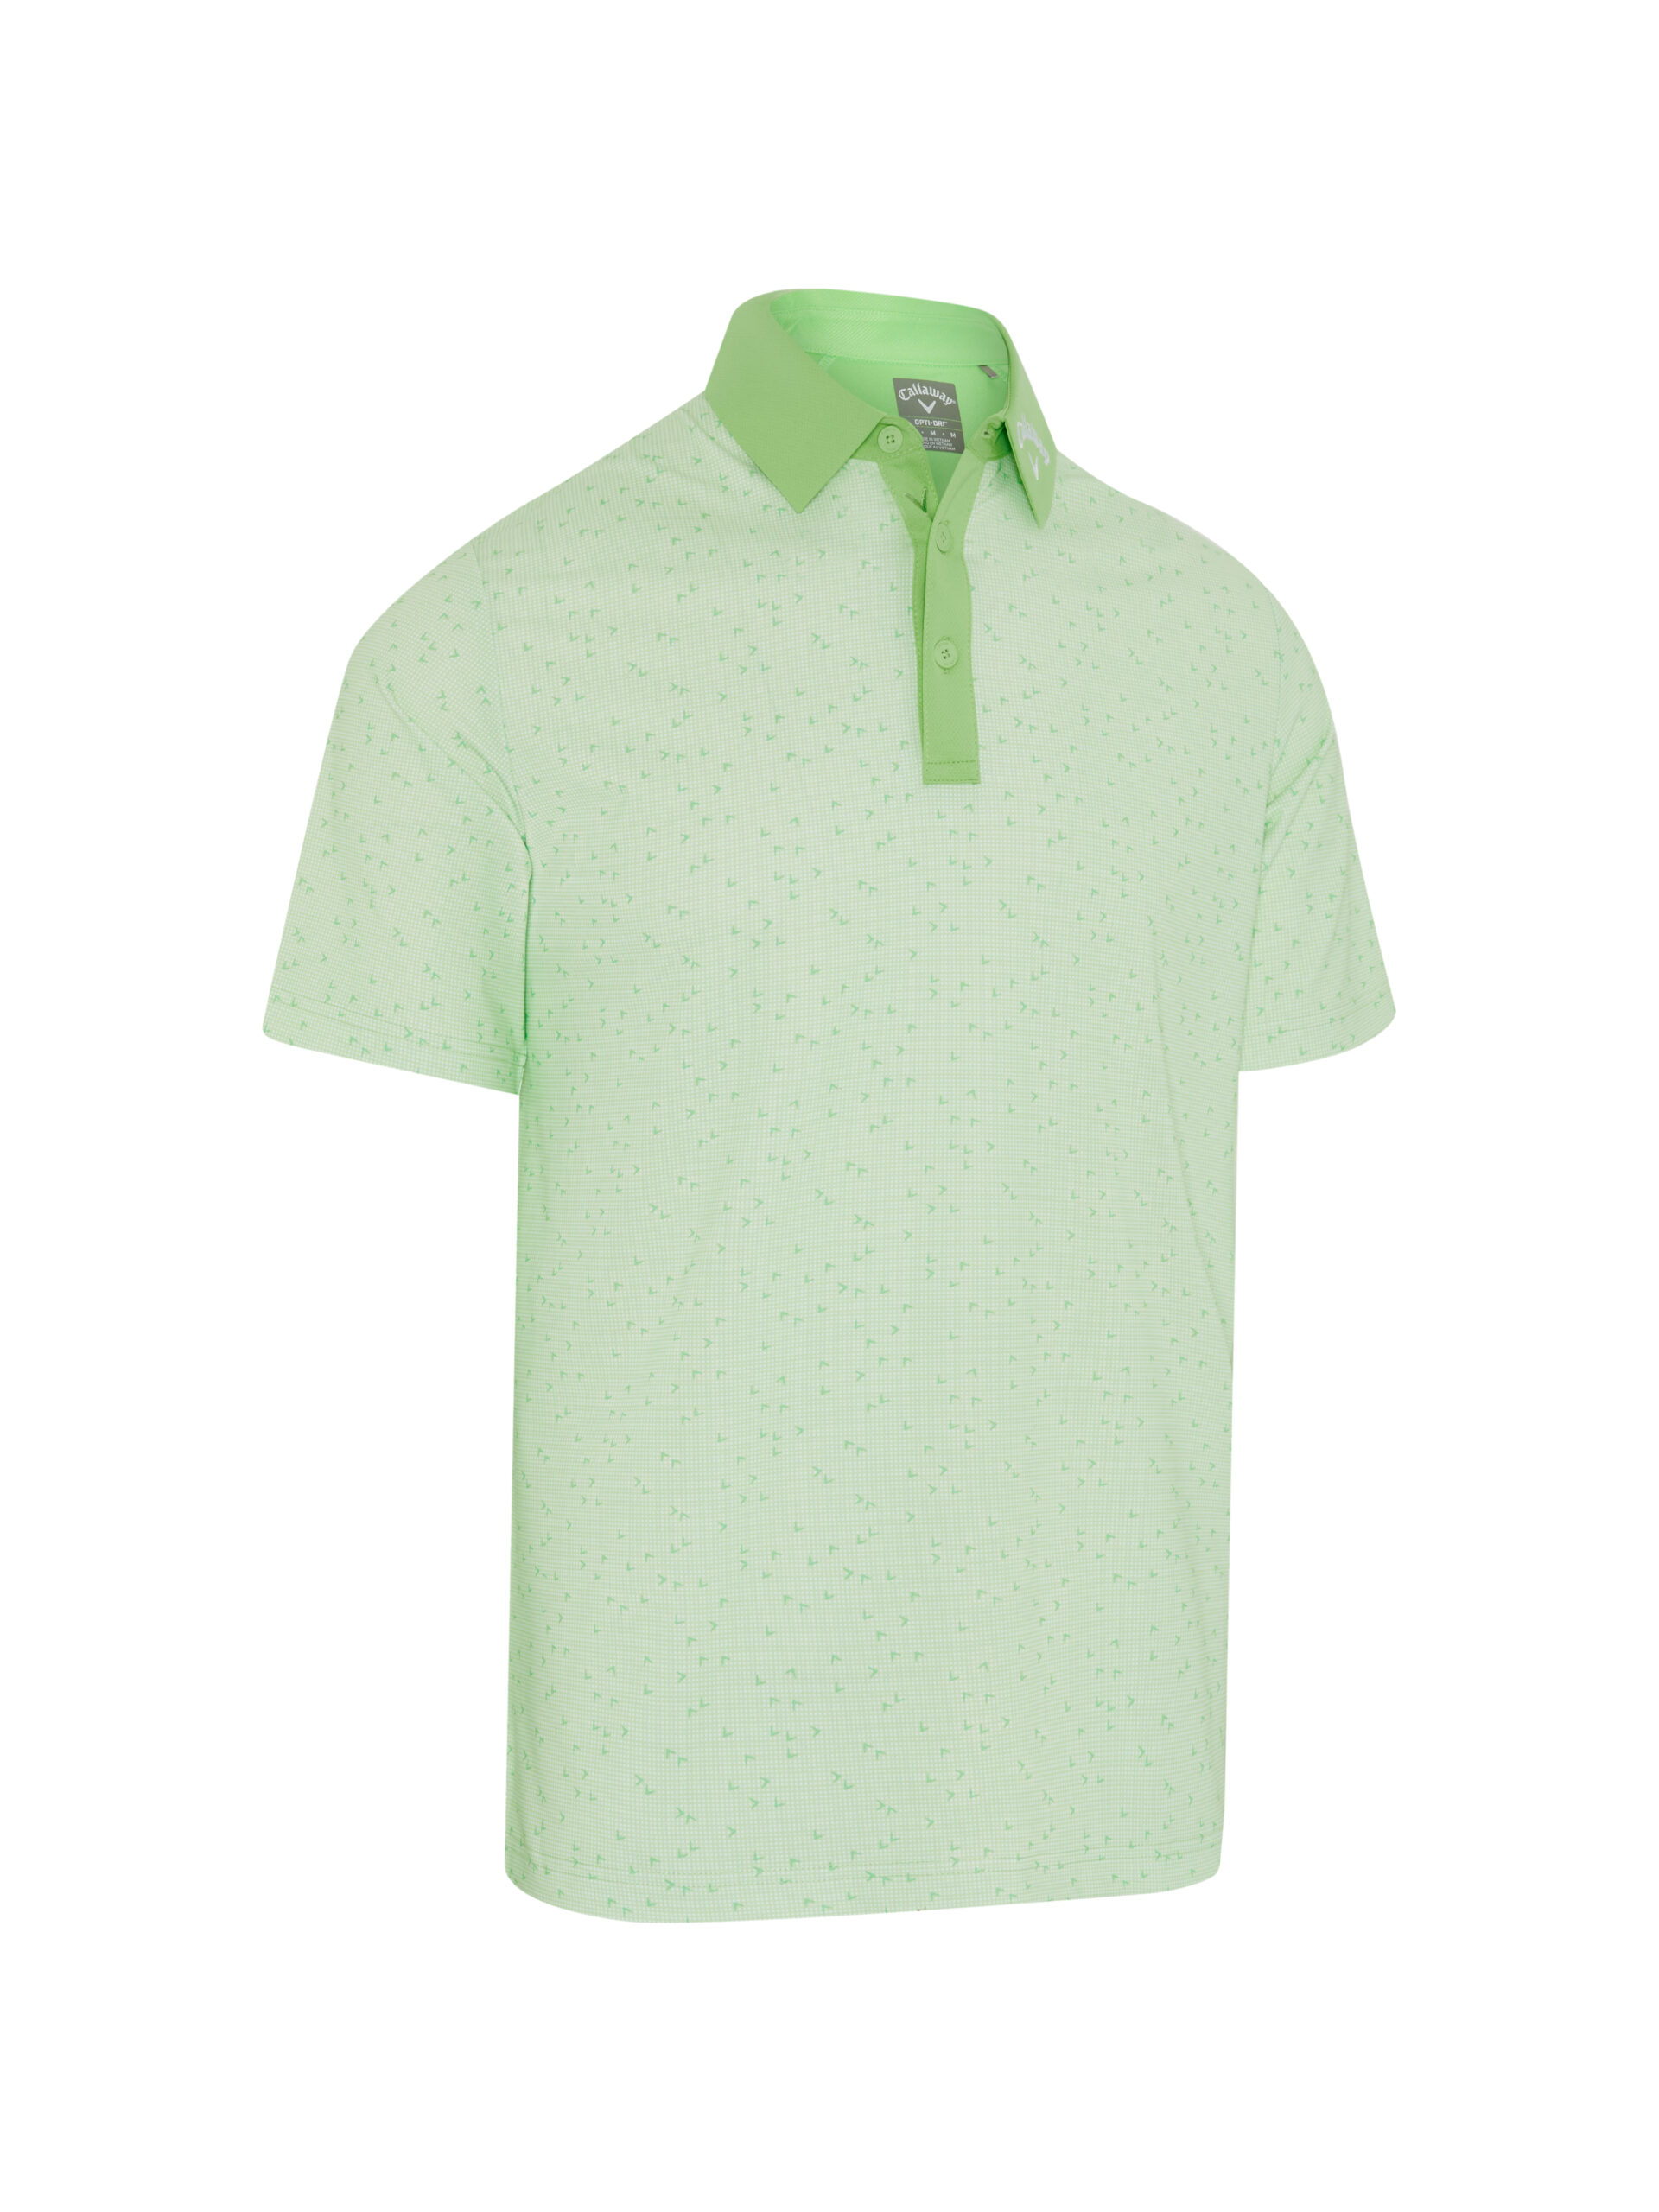 Callaway Trademark All Over Chev pánské golfové triko, světle zelené, vel. L